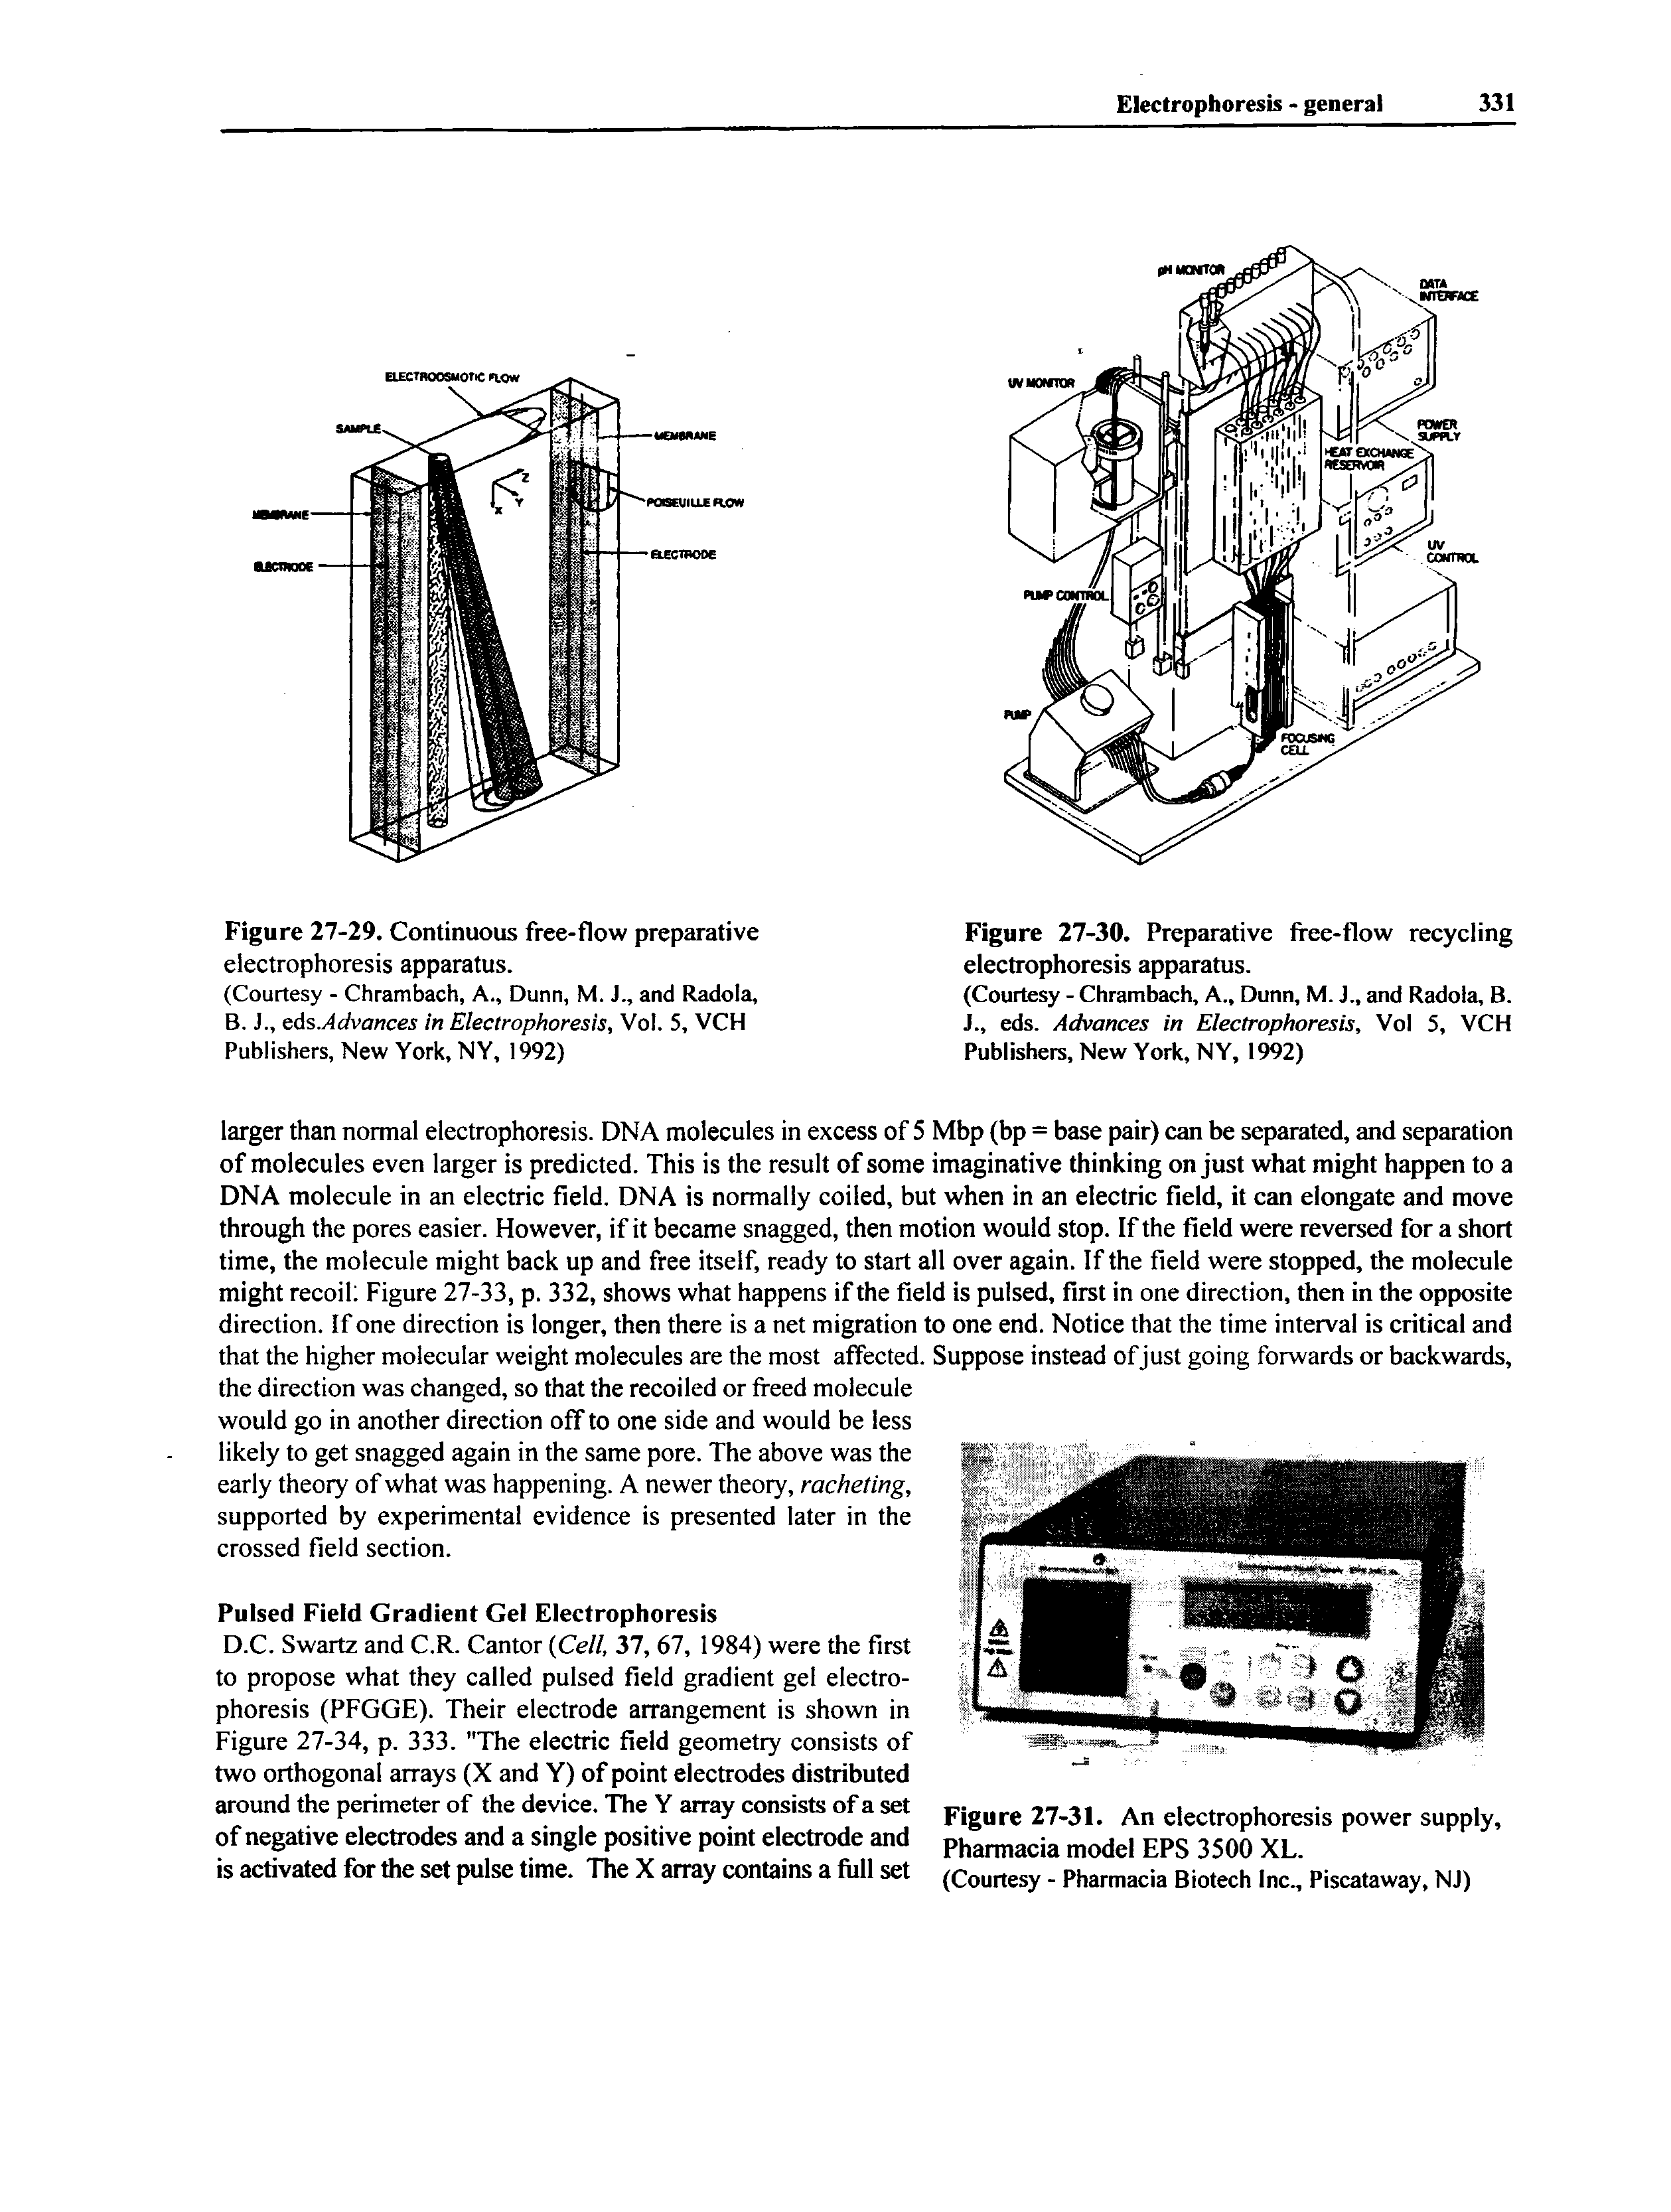 Figure 27-31. An electrophoresis power supply, Pharmacia model EPS 3500 XL.